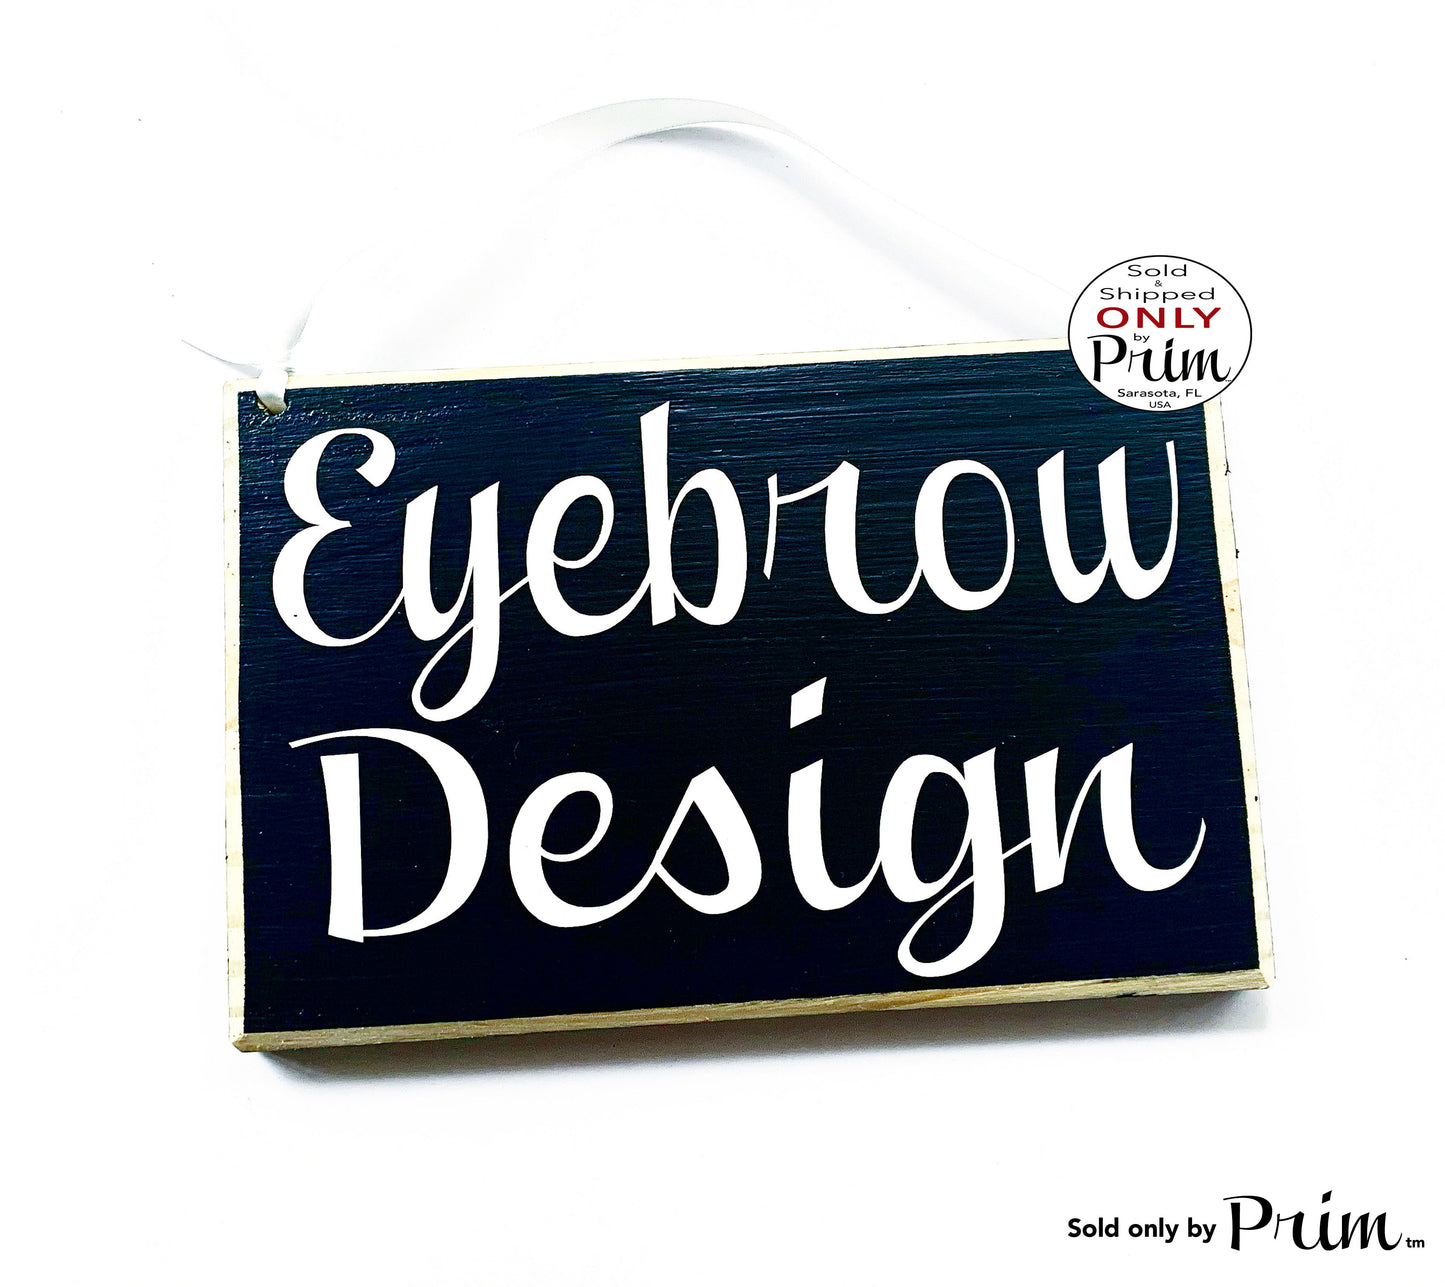 Designs by Prim 8x6 Eyebrow Design Custom Wood Sign Room Salon Spa Do Not Disturb Facial Treatment Waxing Lashes Lash Studio Wall Door Plaque